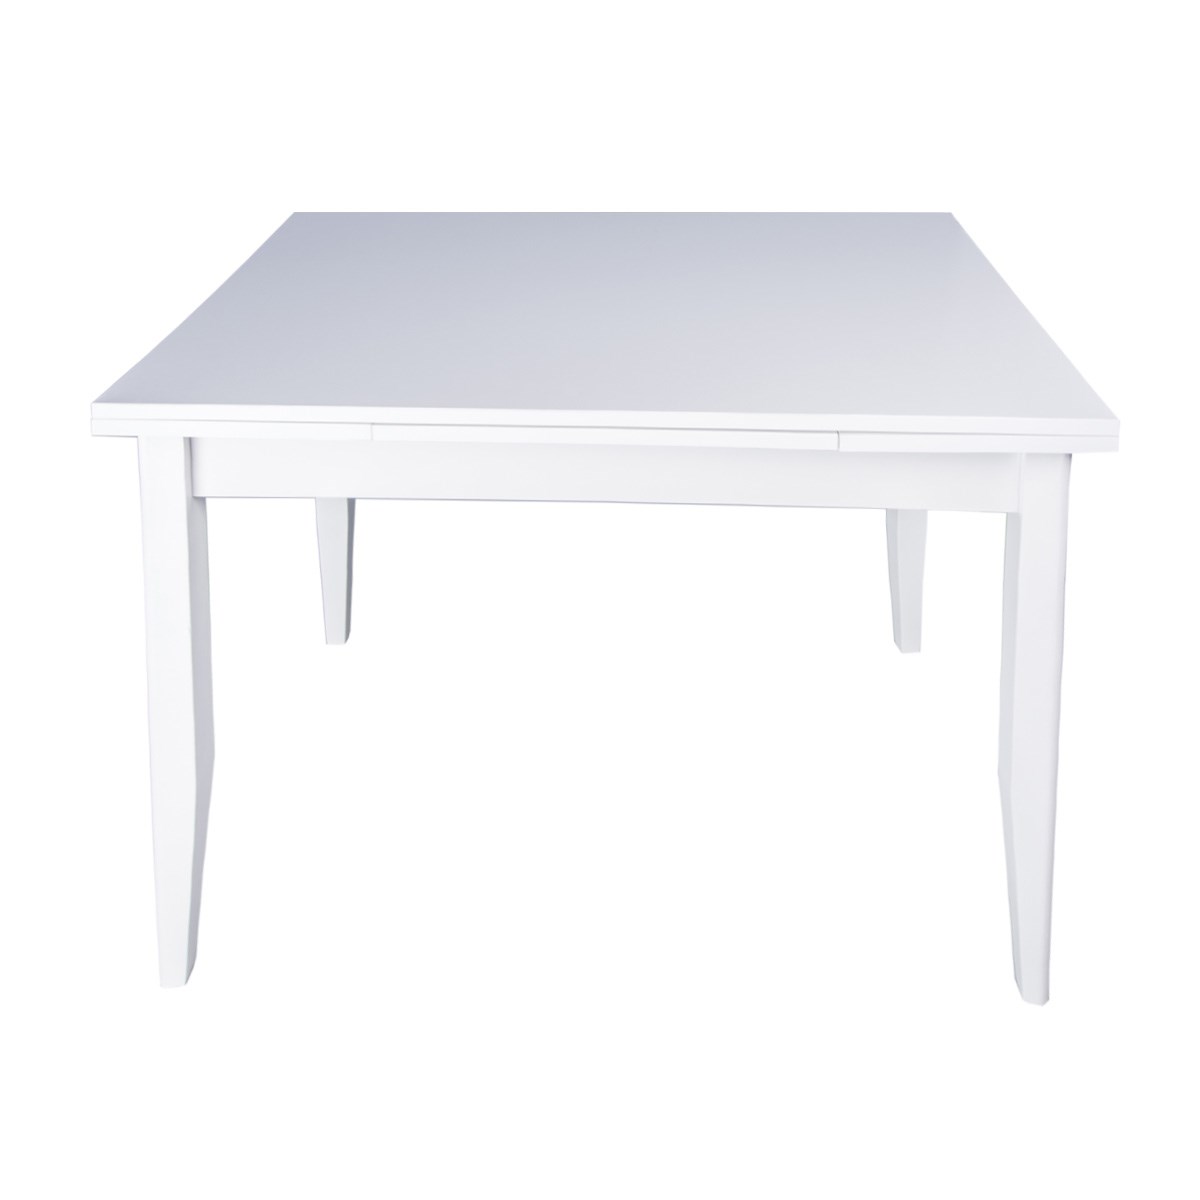 Beyaz Küçük Ahşap Masa | Kristal Masa & Sandalye